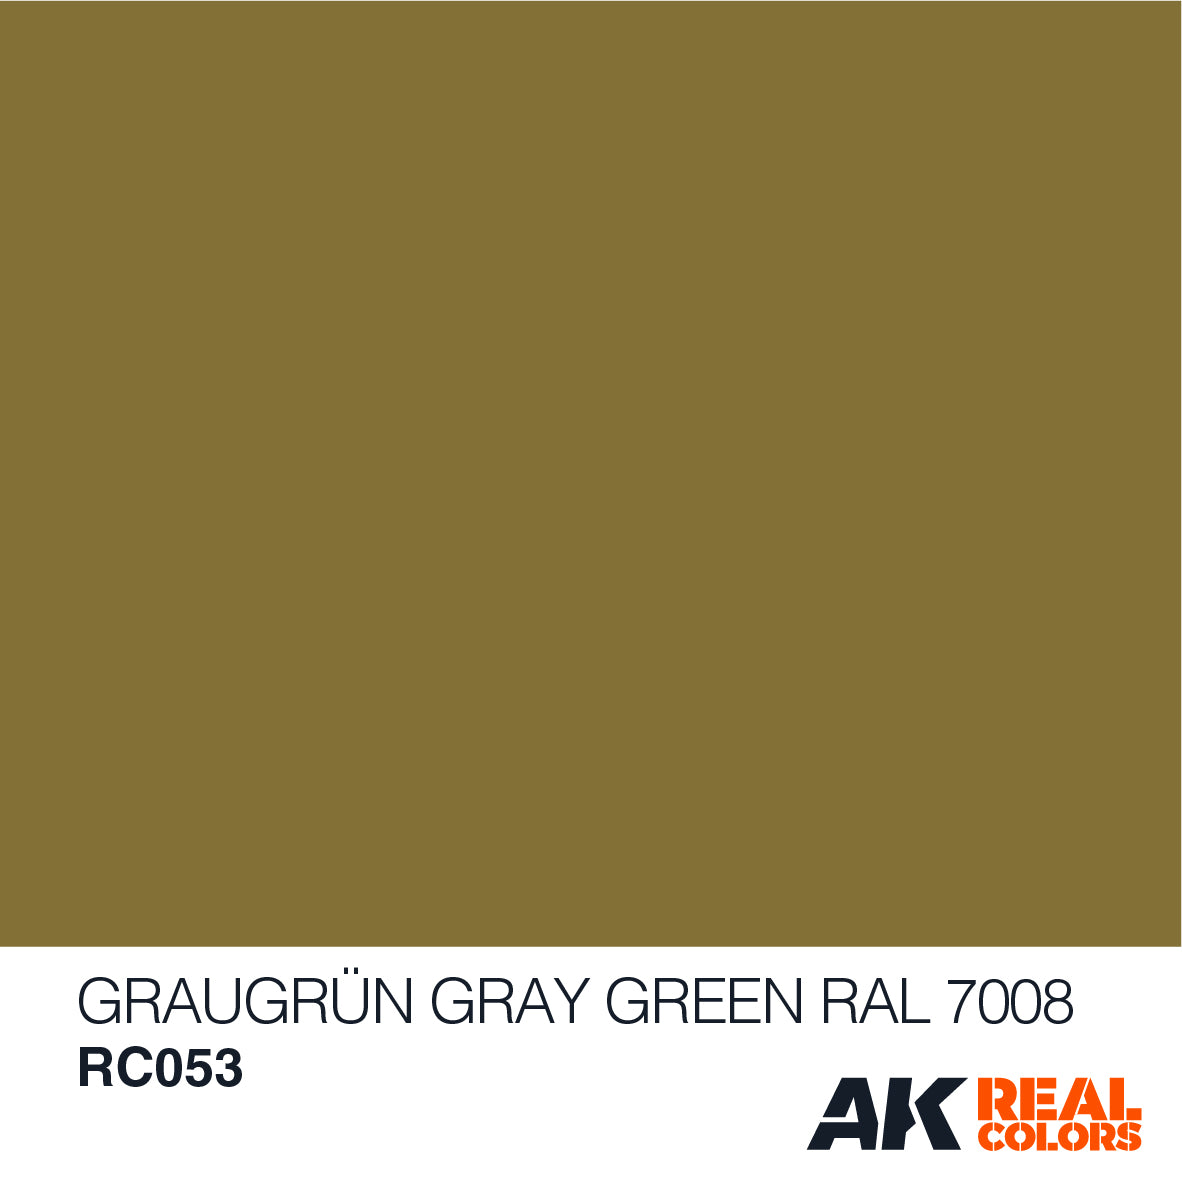 Graugrün-Gray Green RAL 7008 10ml - Loaded Dice Barry Vale of Glamorgan CF64 3HD